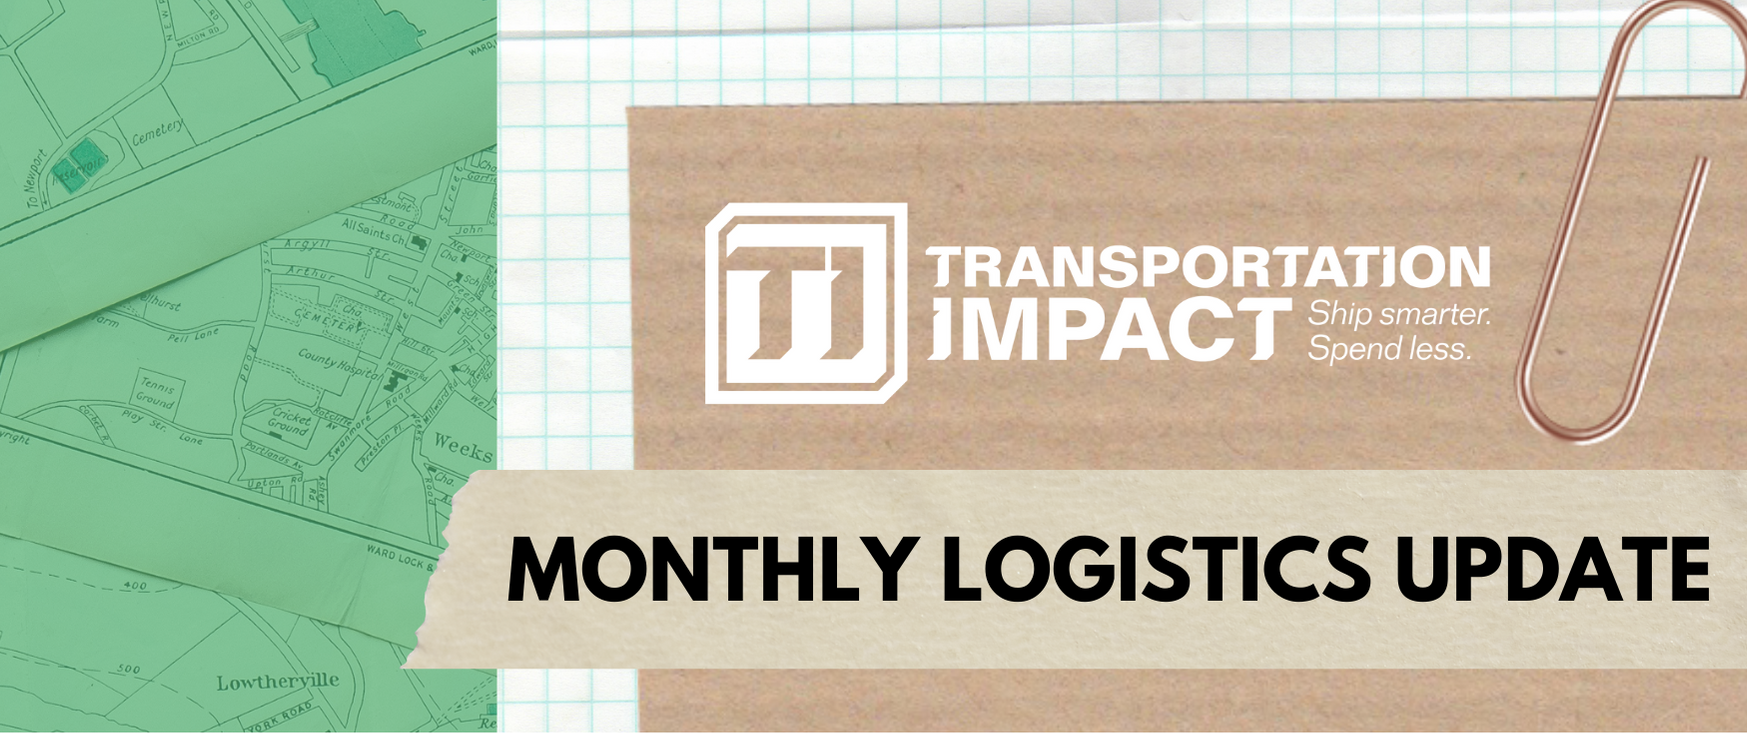 Monthly Logistics Update